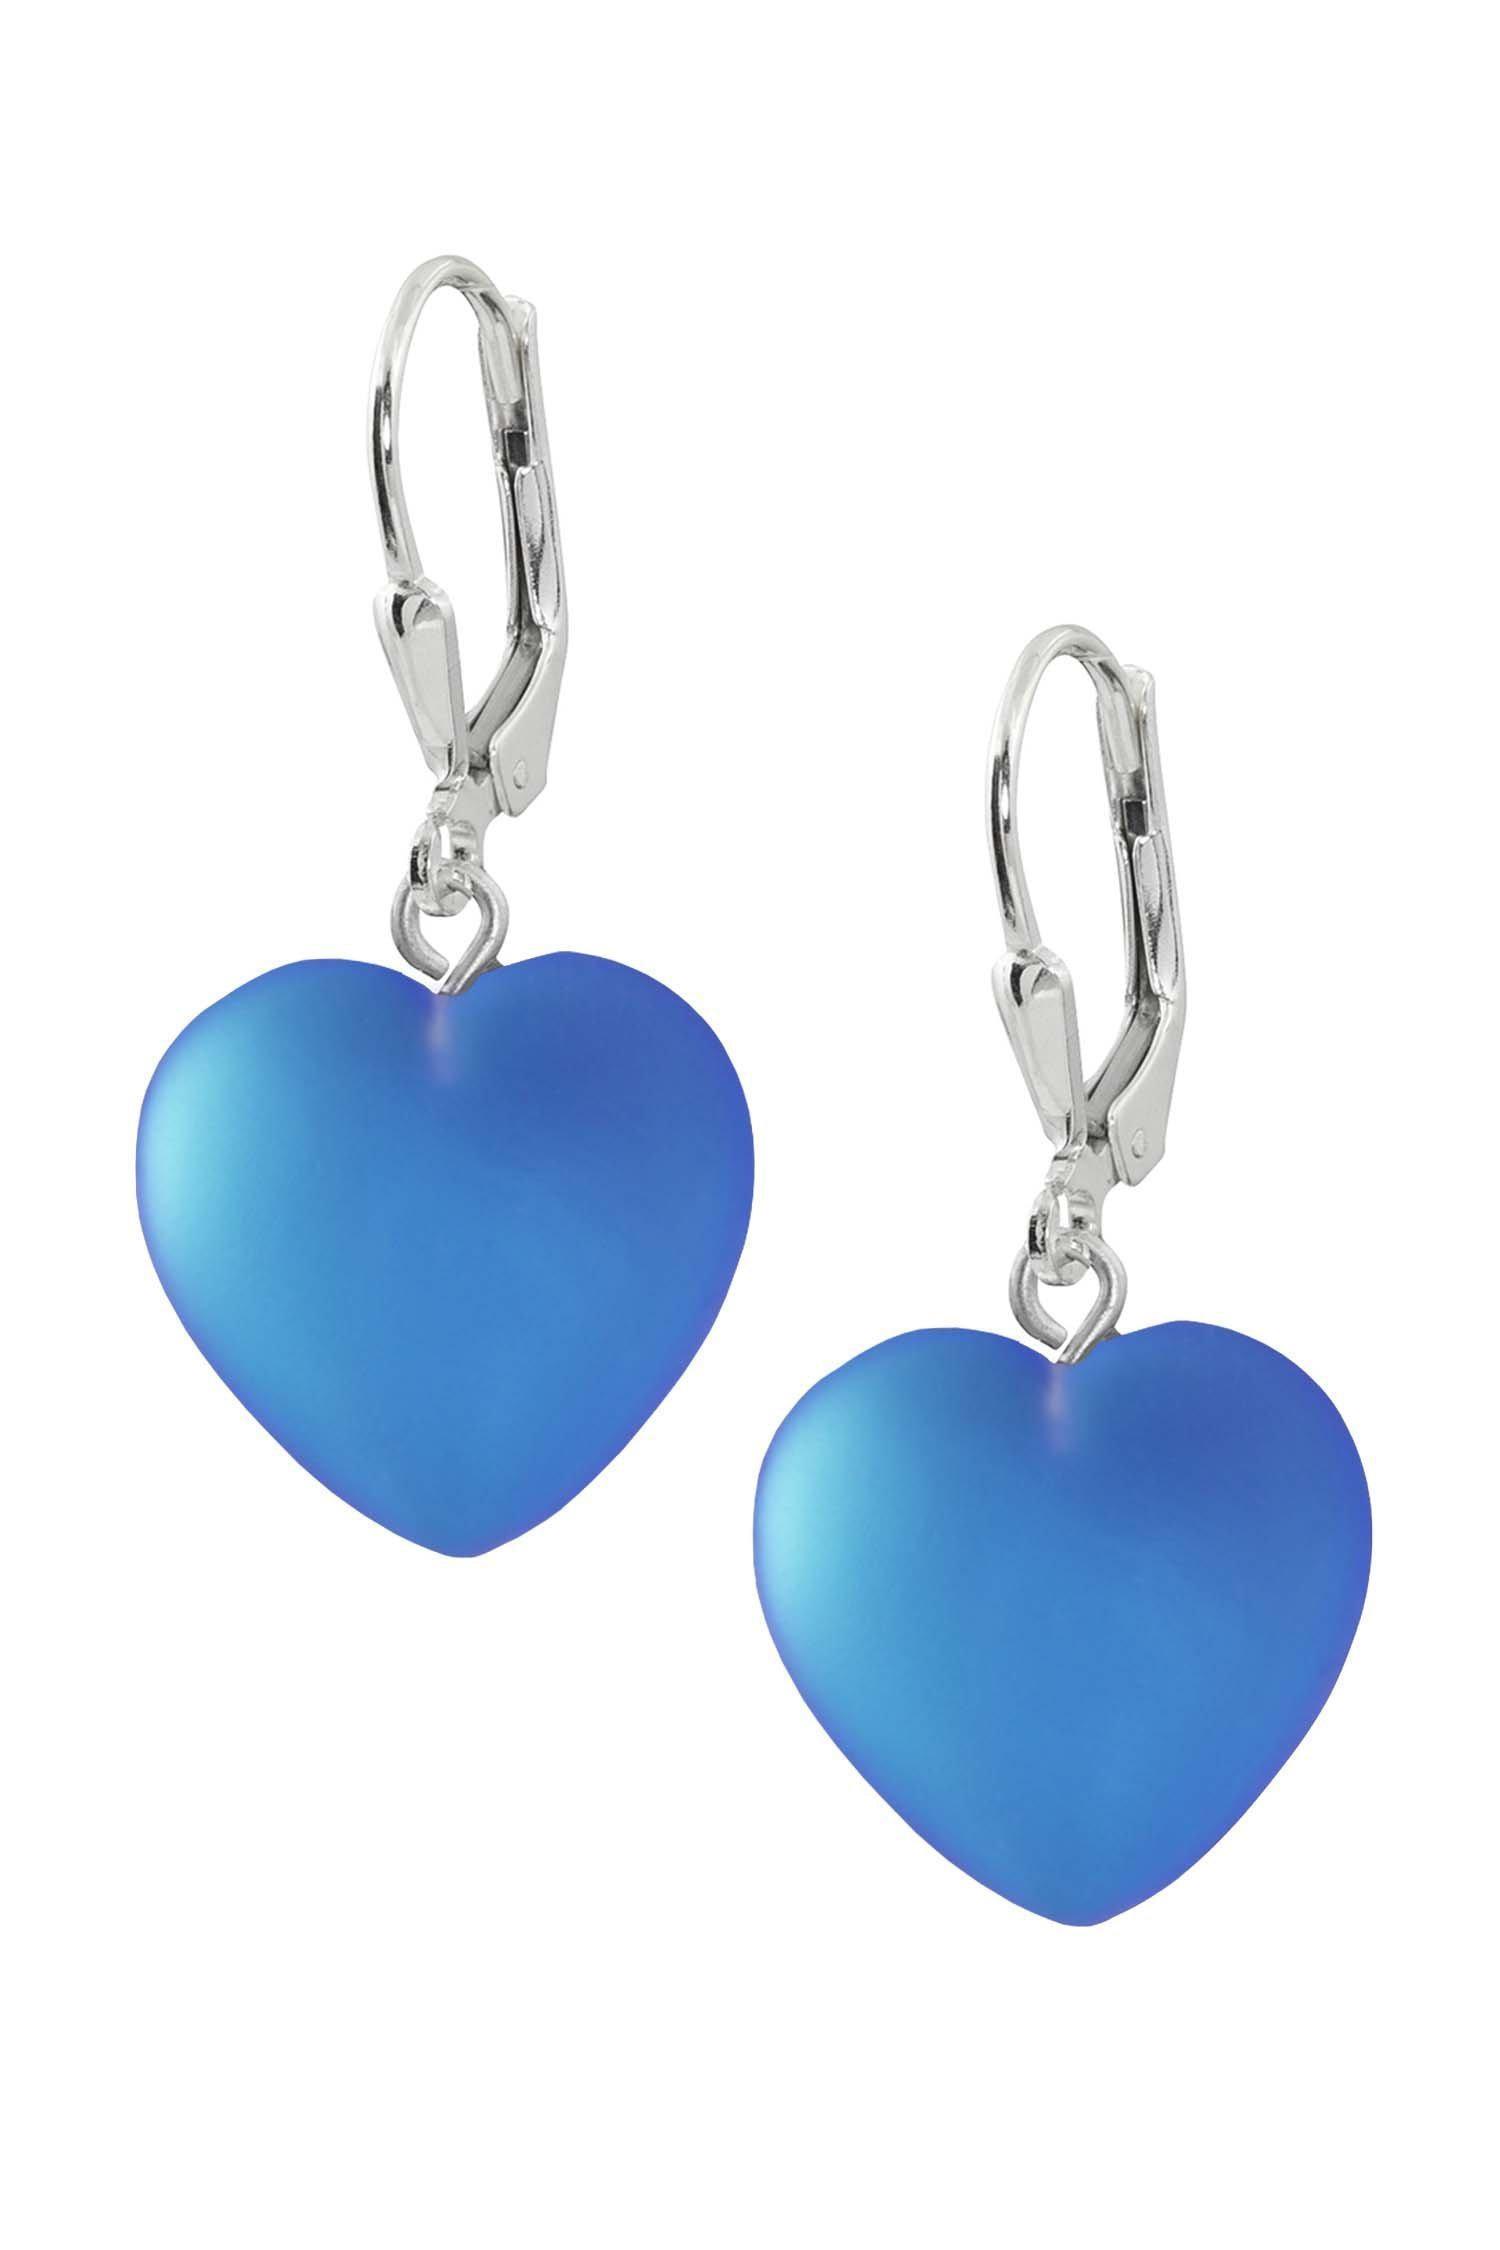 Heart Shaped Crystal Earrings On Surface Stock Photo 2301998779 |  Shutterstock